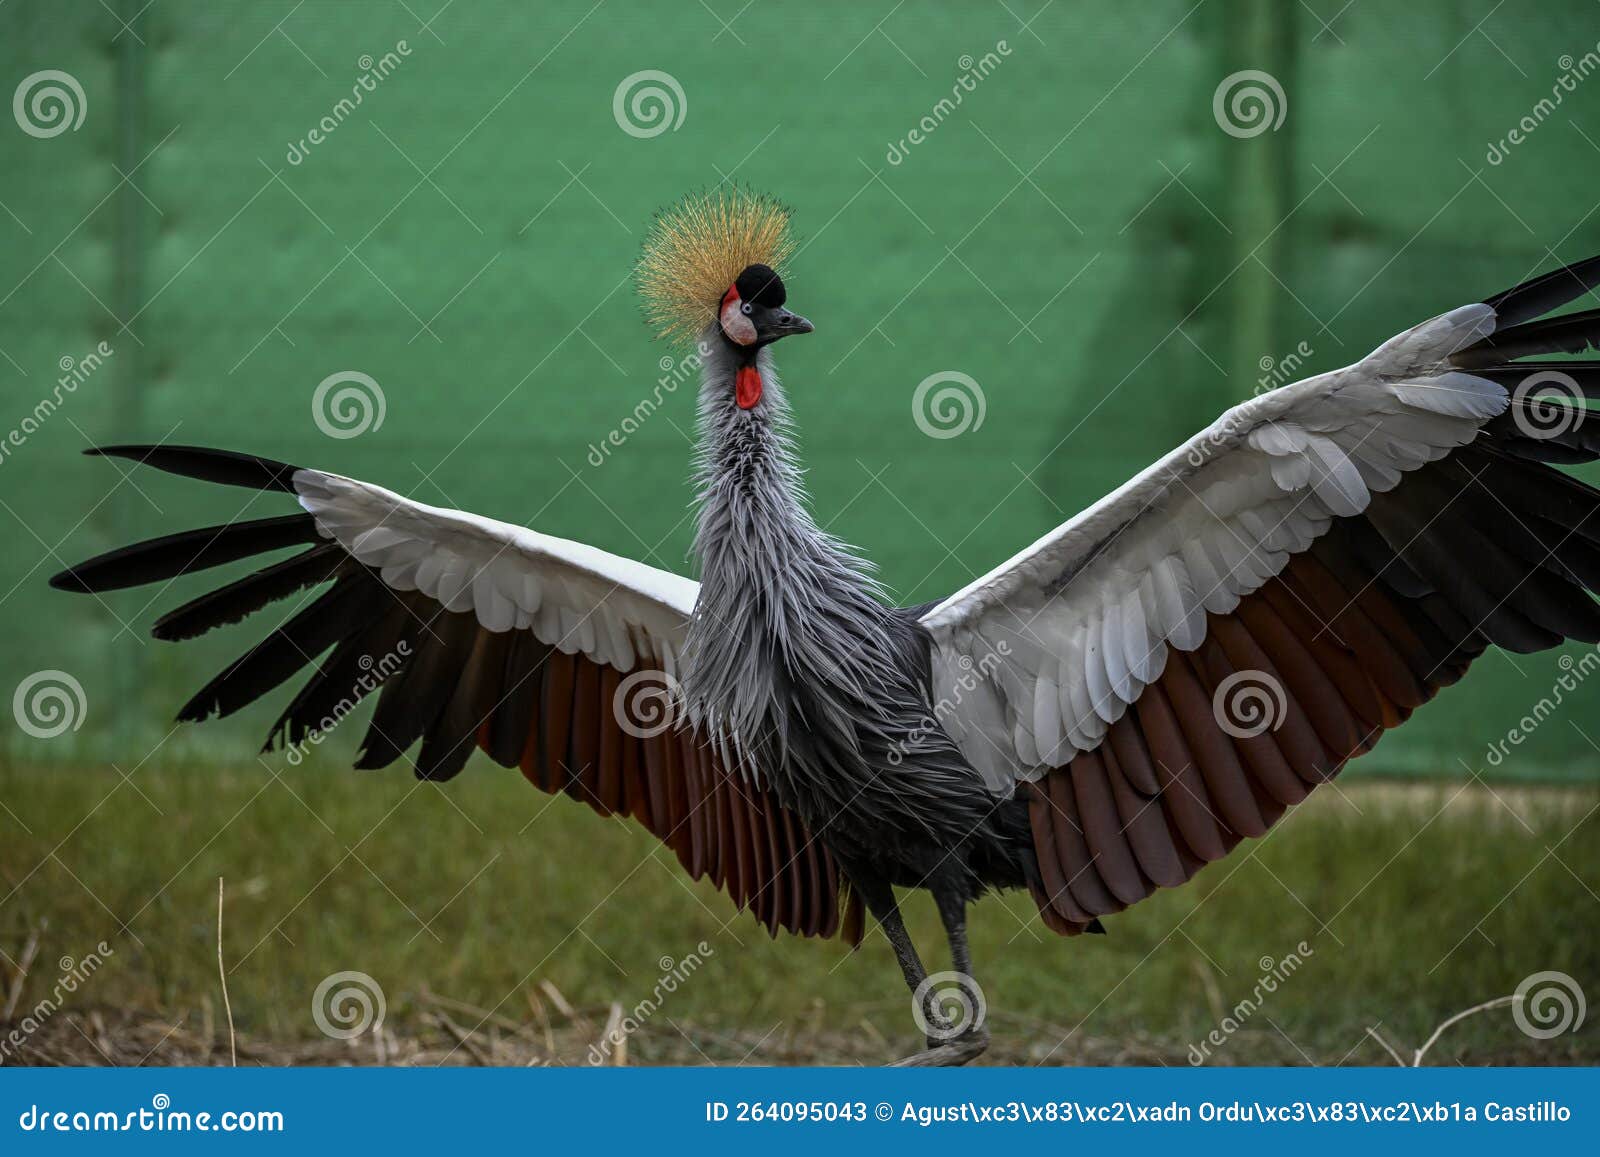 balearica regulorum or the grey-crowned crane is a gruiform bird in the gruidae family.